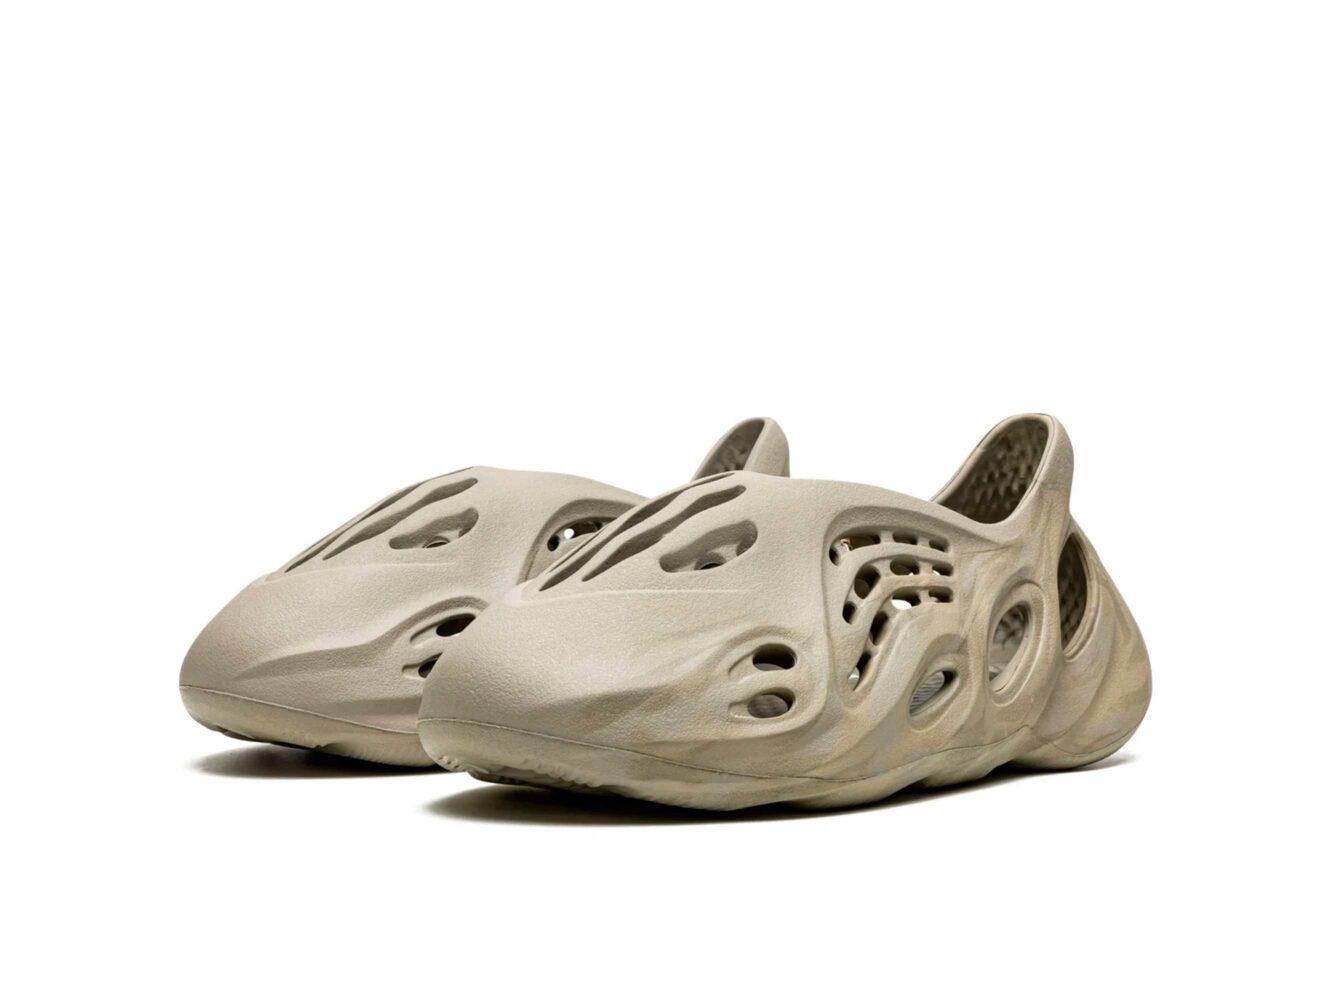 adidas yeezy foam runner stone sage GX4472 купить